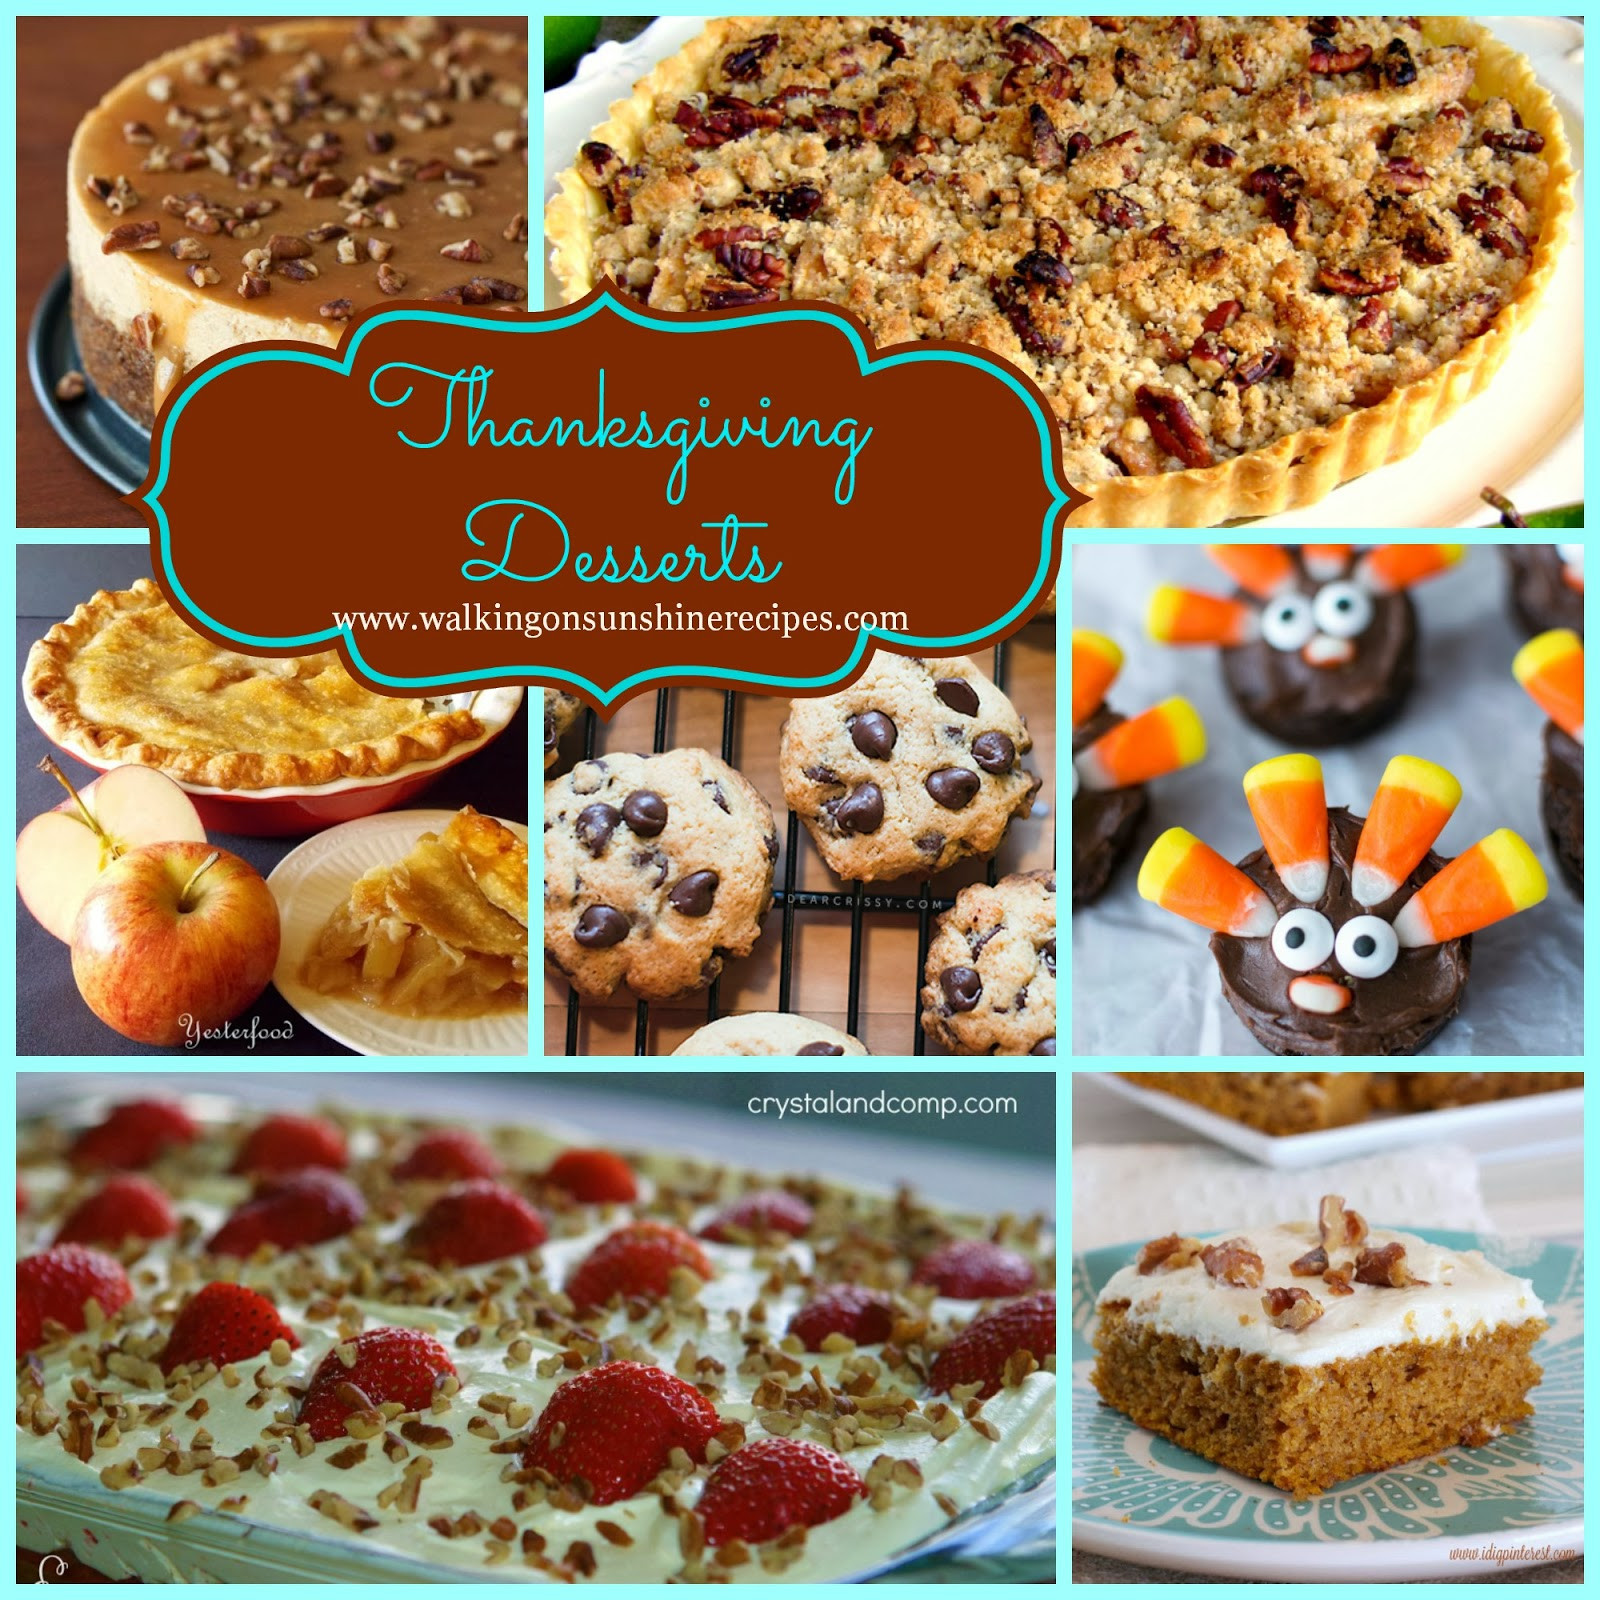 Thanksgiving Desserts Pinterest
 Holidays The Best Desserts to Make for Thanksgiving